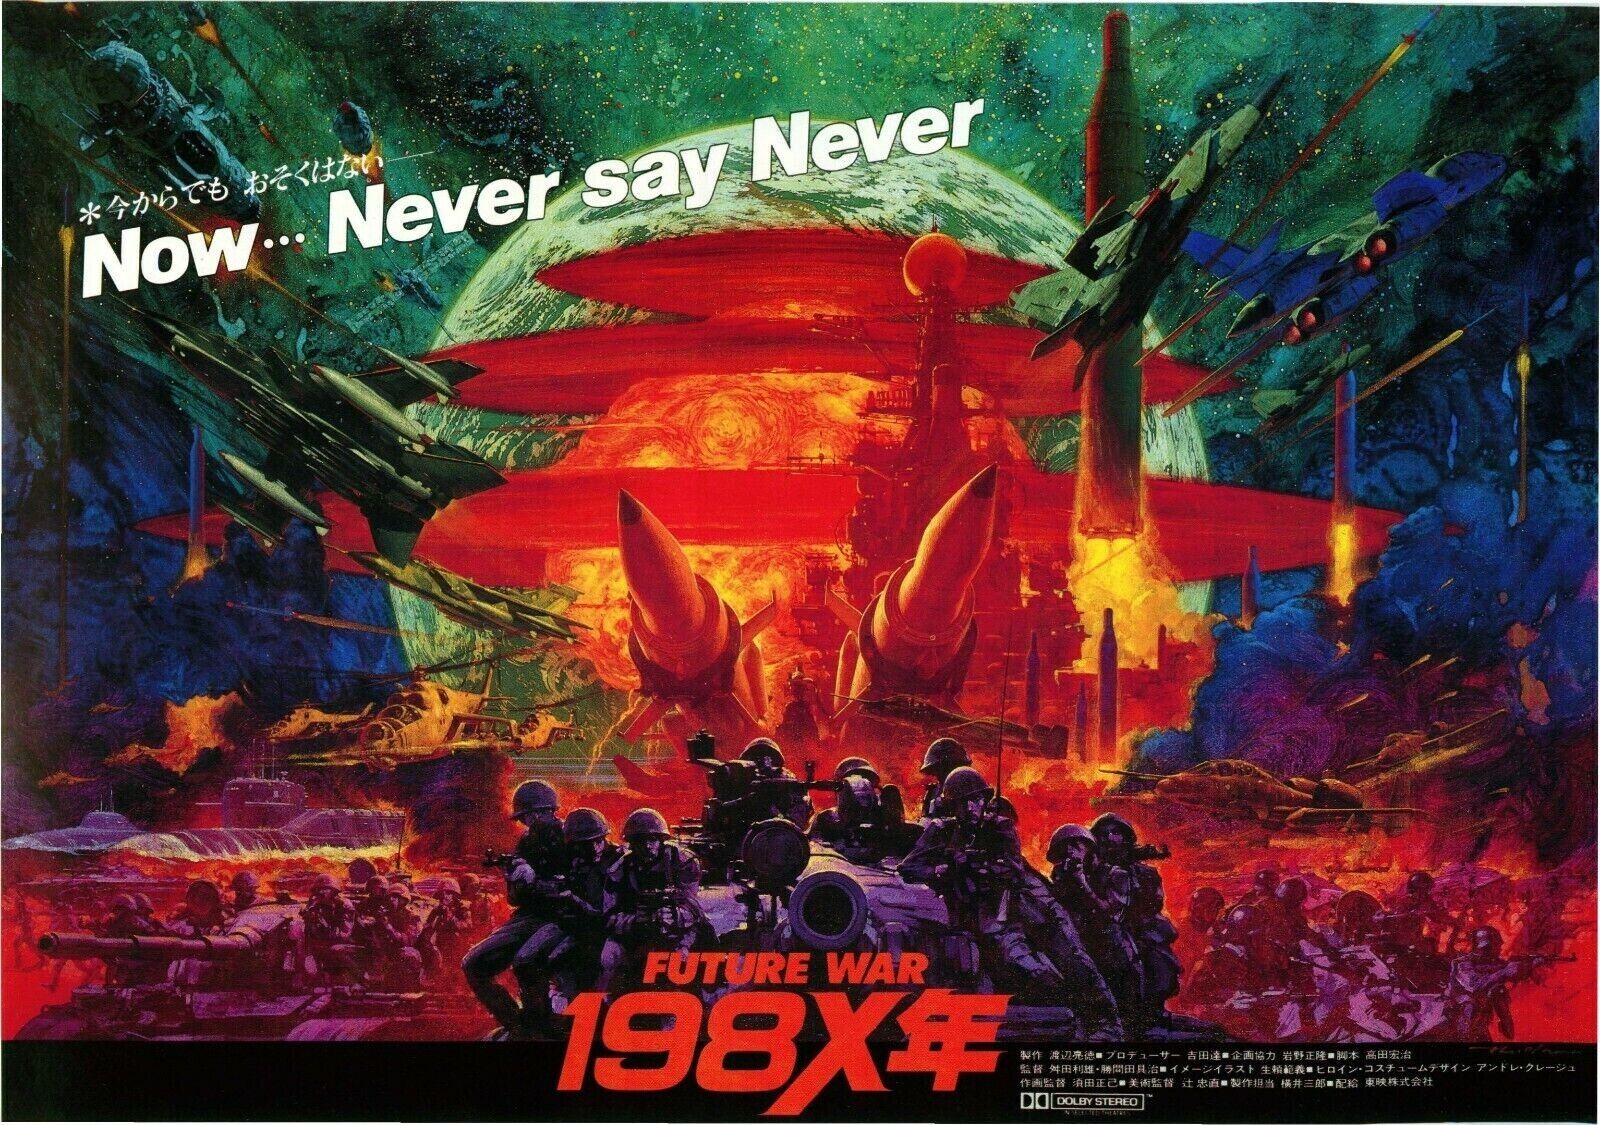 Future War 1986 -198X Japanese Anime Chirashi Mini Ad-Flyer Poster 1982